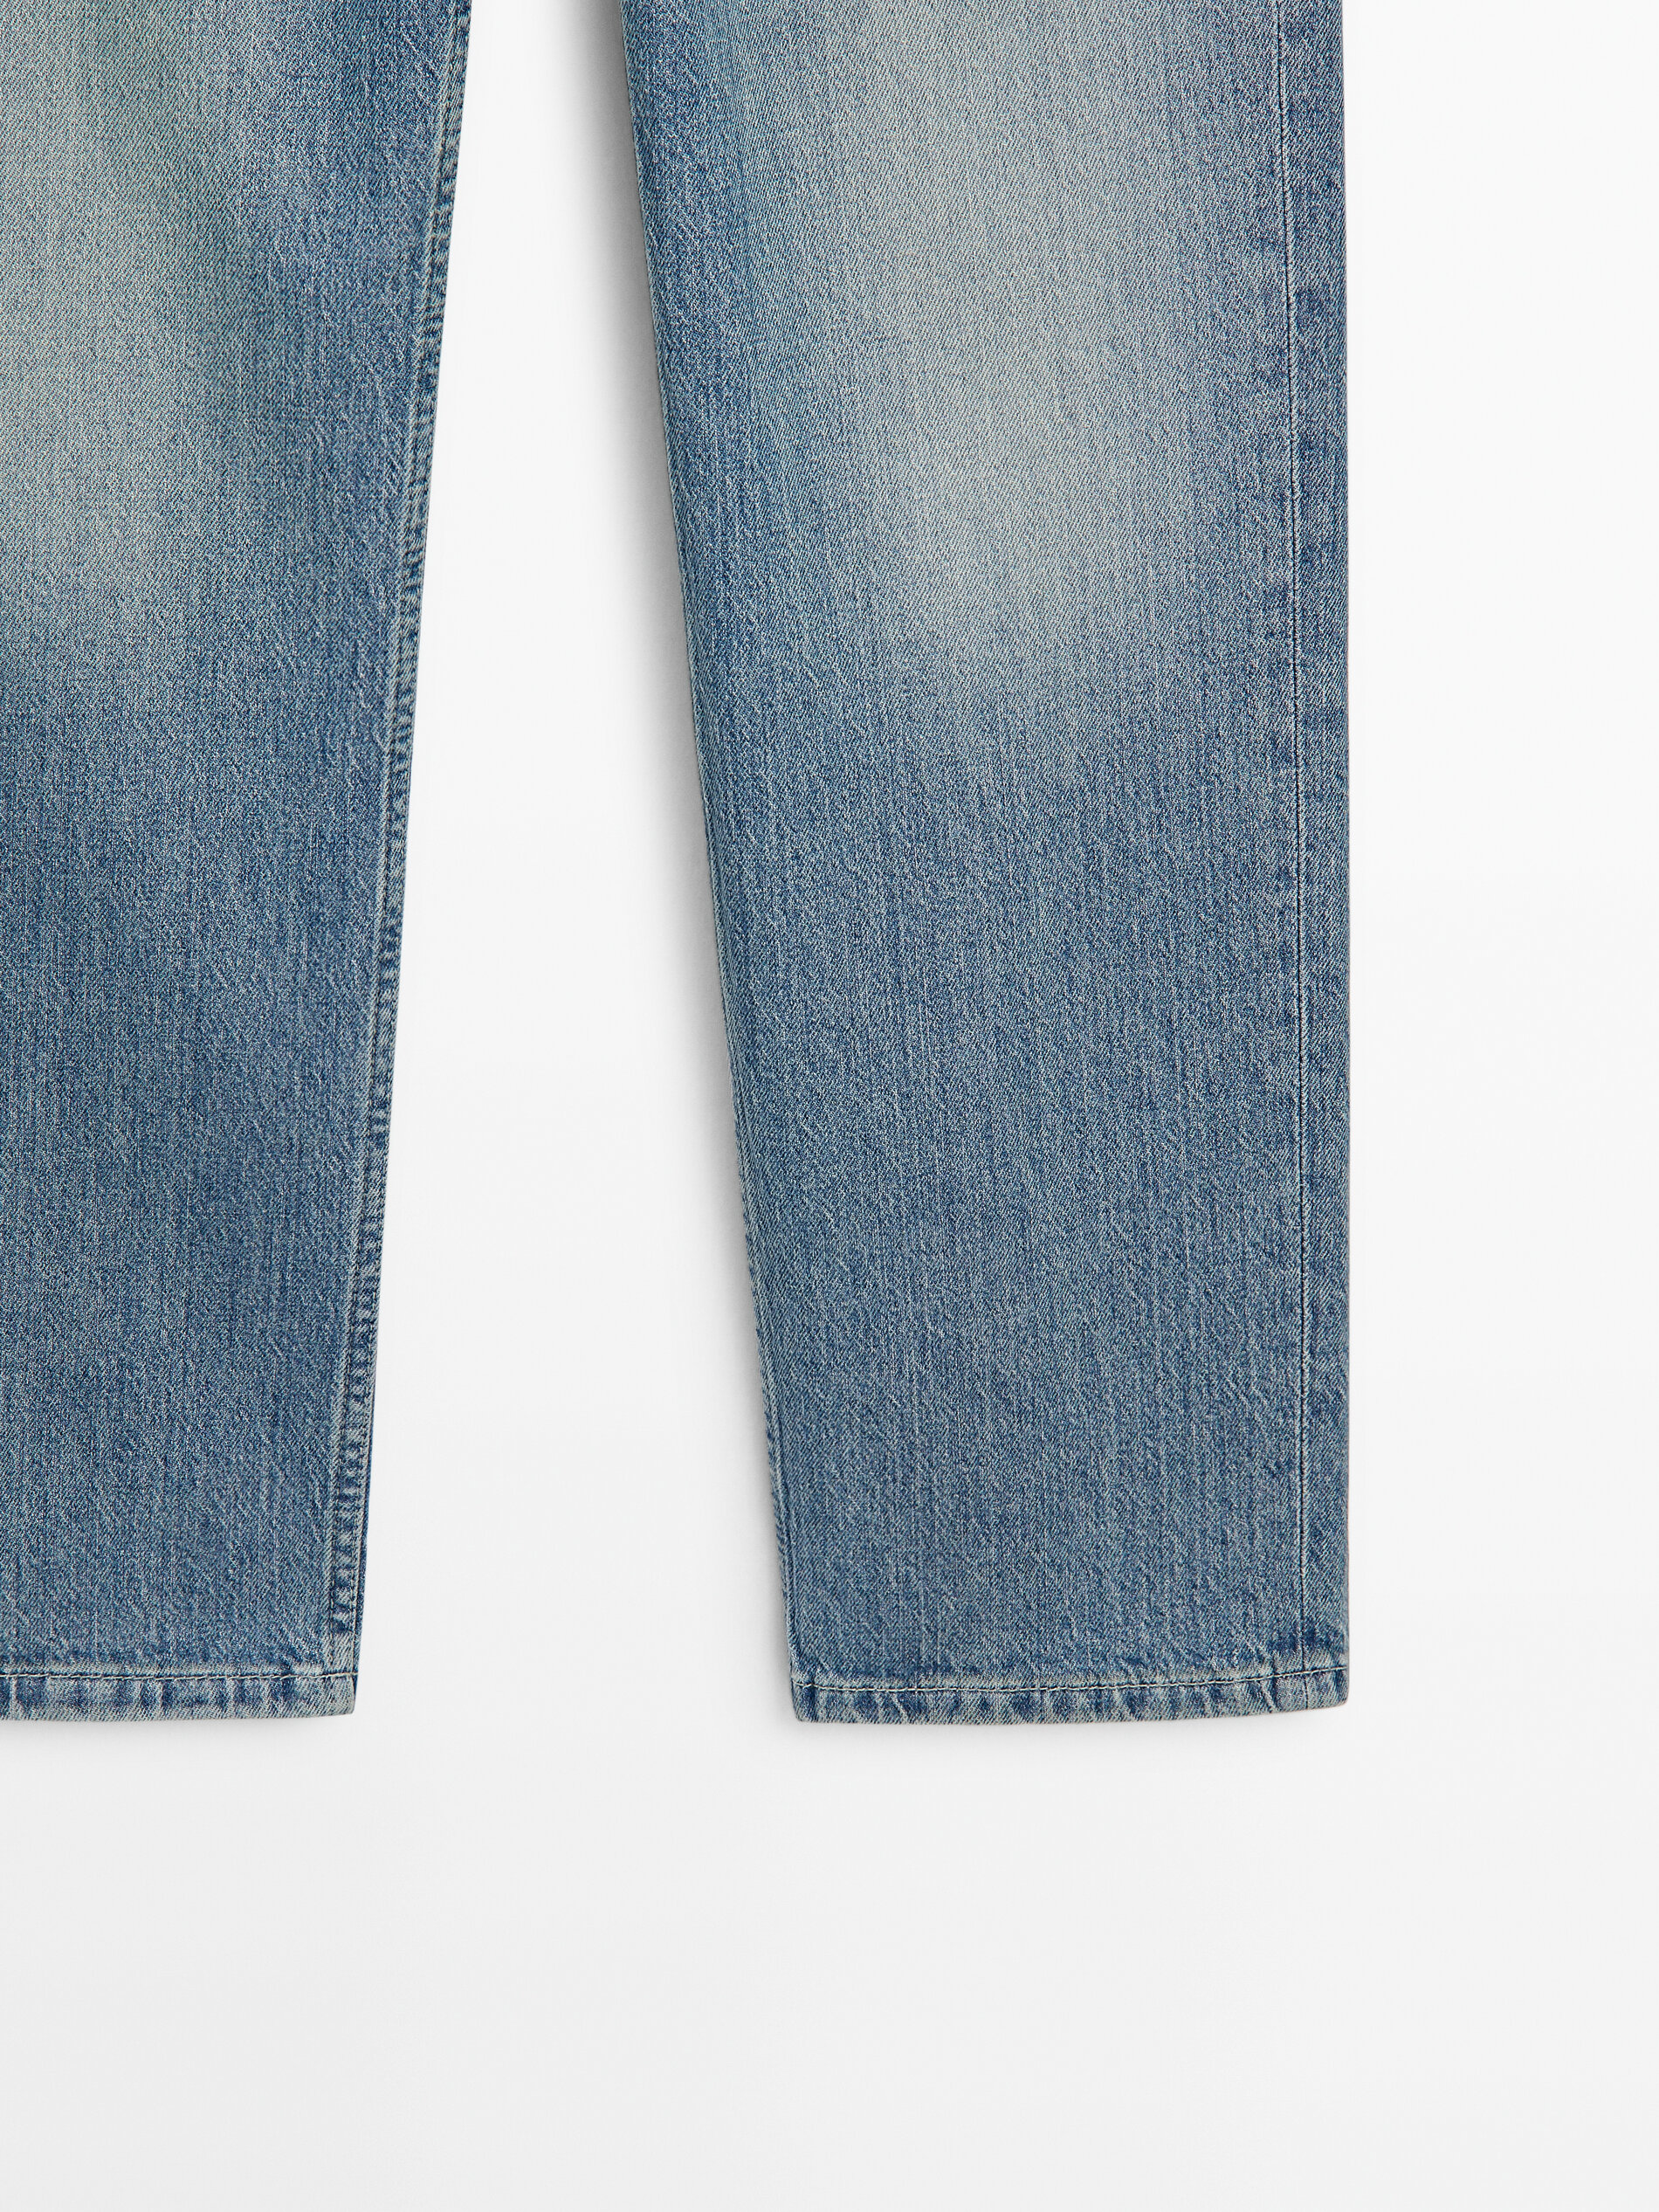 Jeans tiro medio straight fit confort